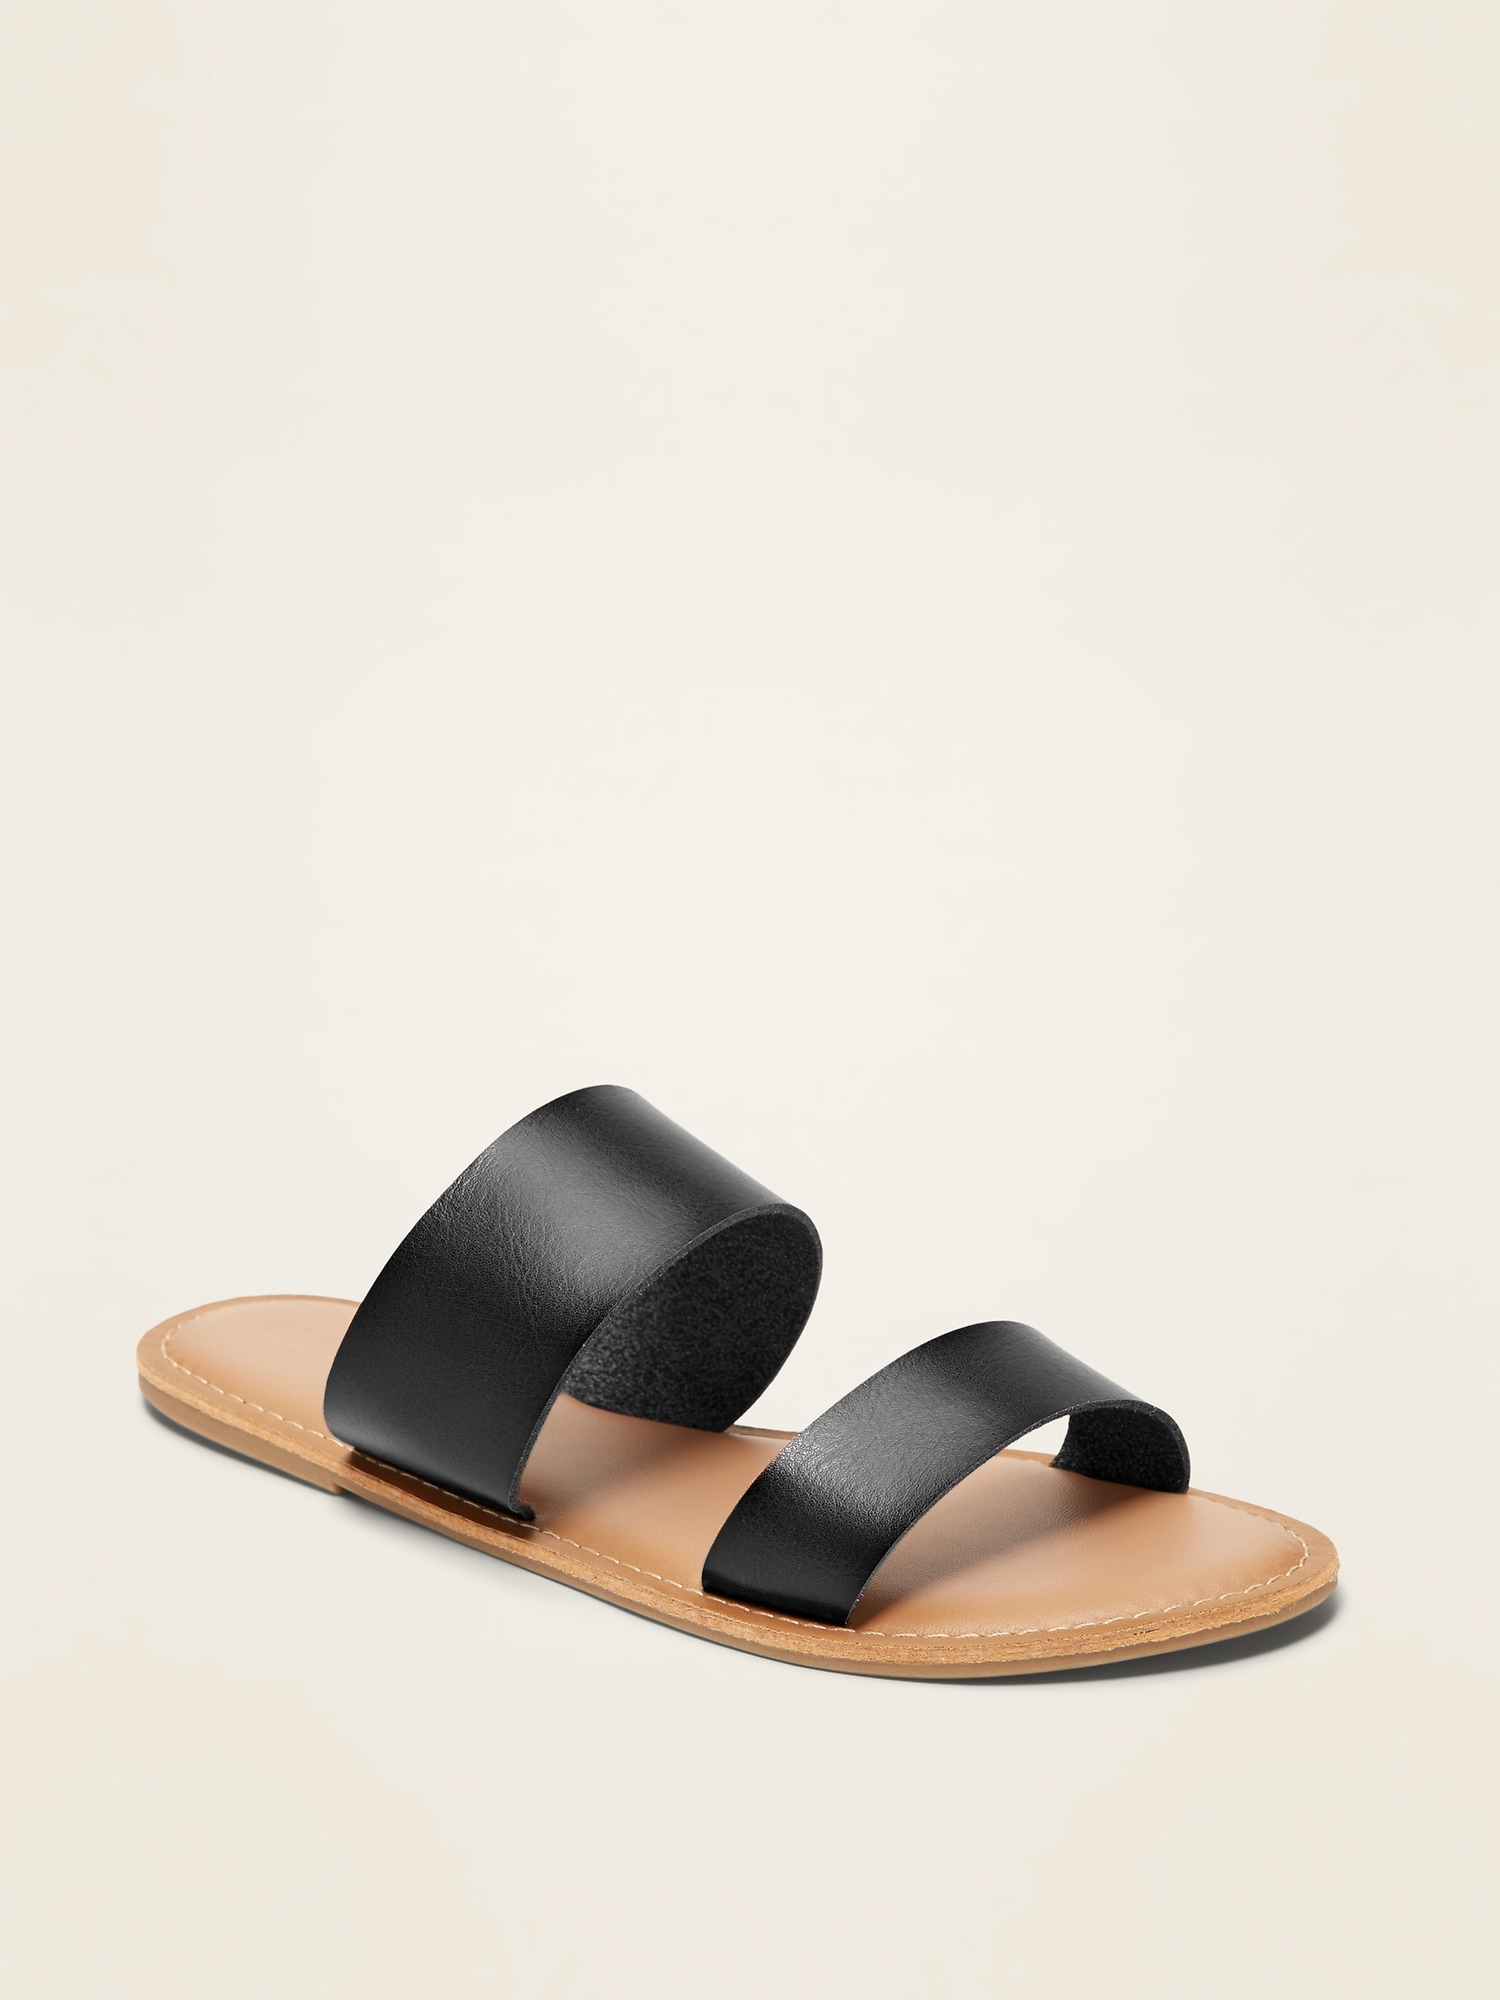 slip on leather sandals